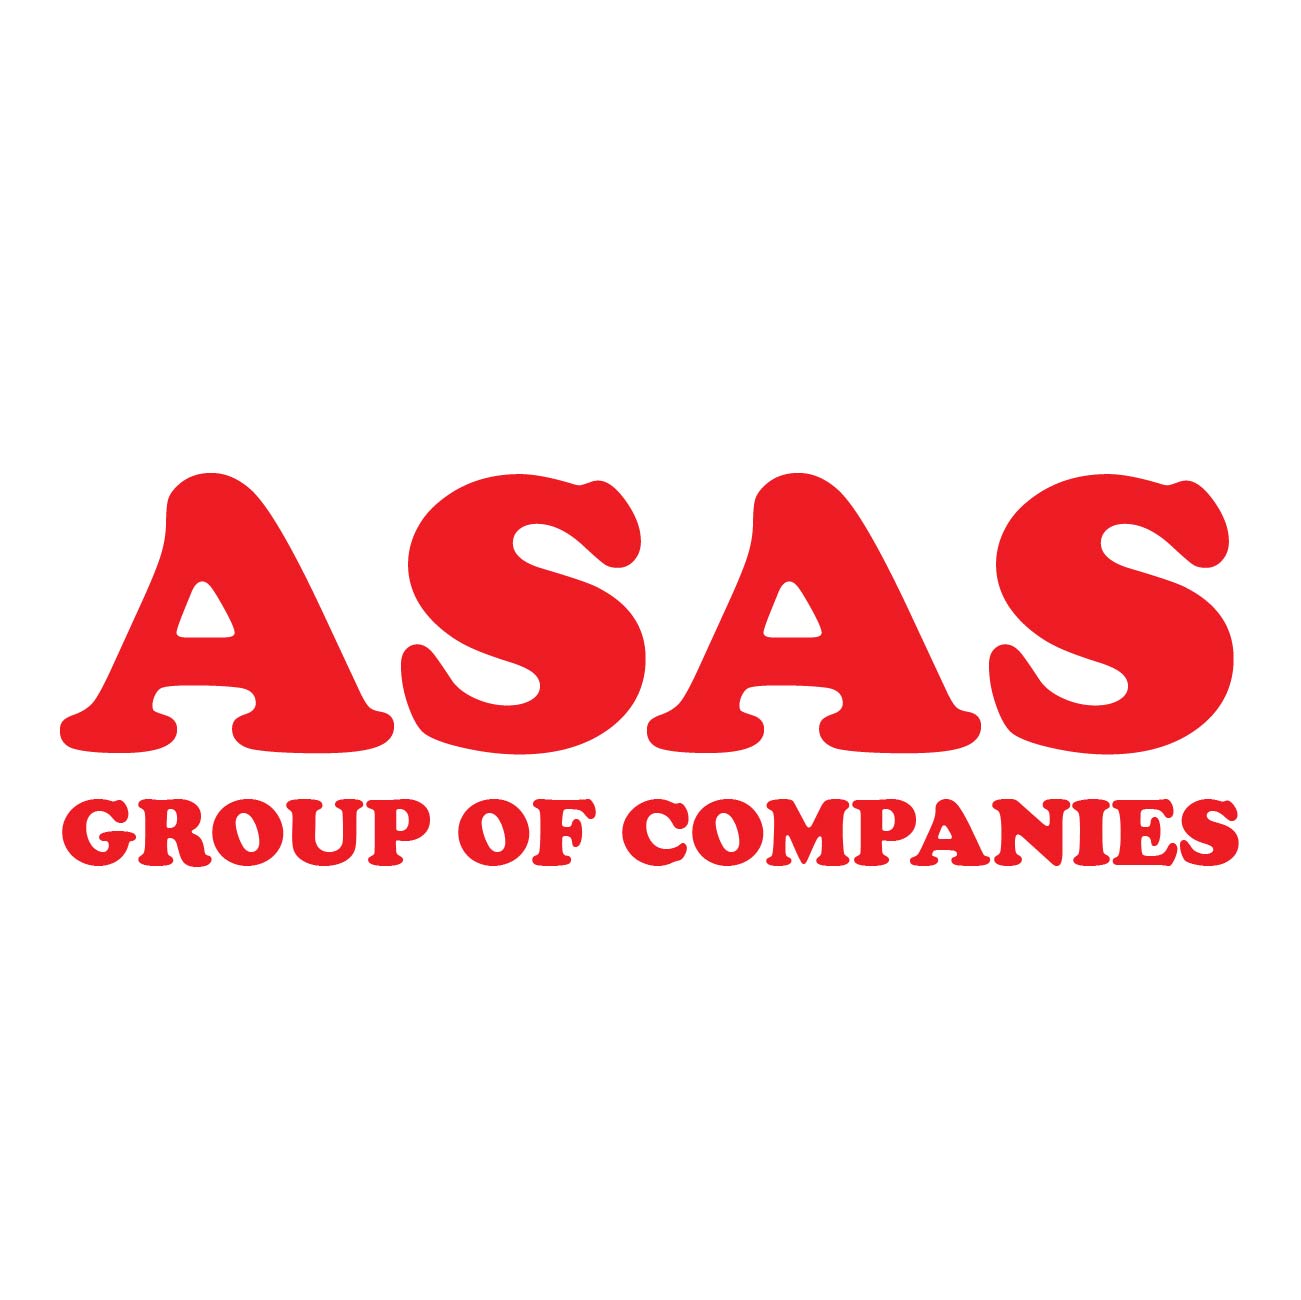 Asas Group of companies